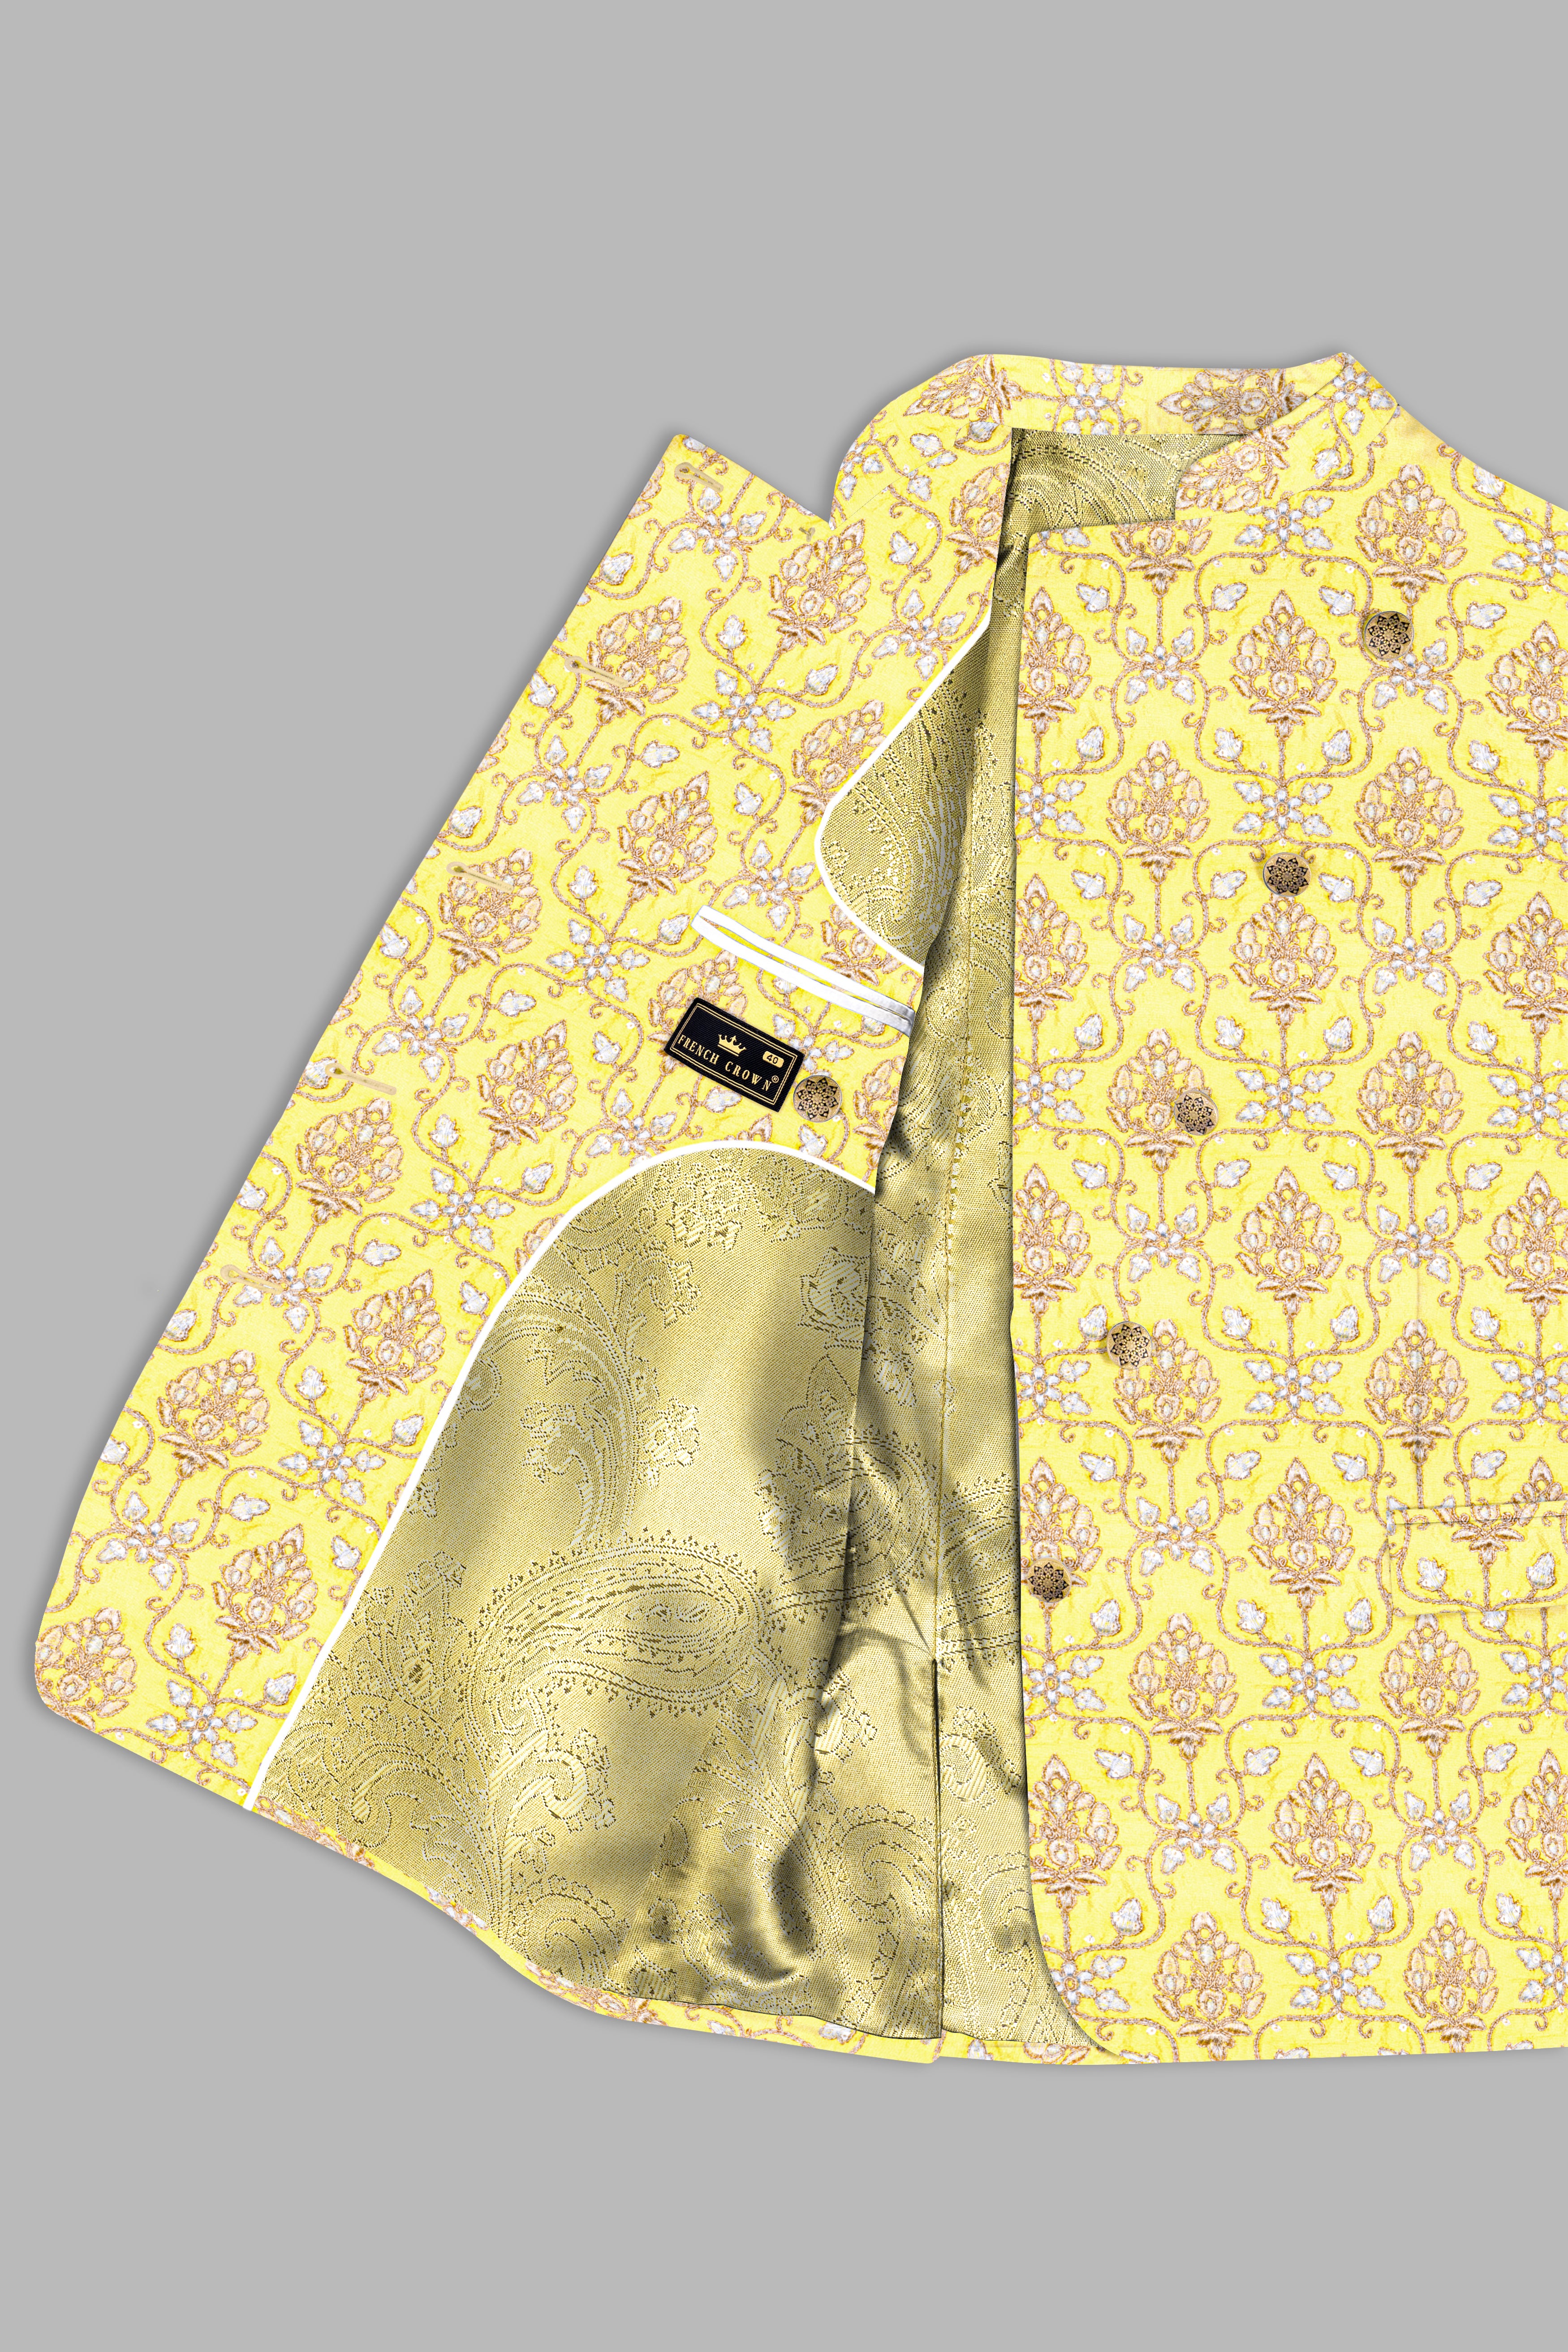 Marigold Yellow And Quicksand Brown Thread Embroidered Cross Placket Bandhgala Jodhpuri